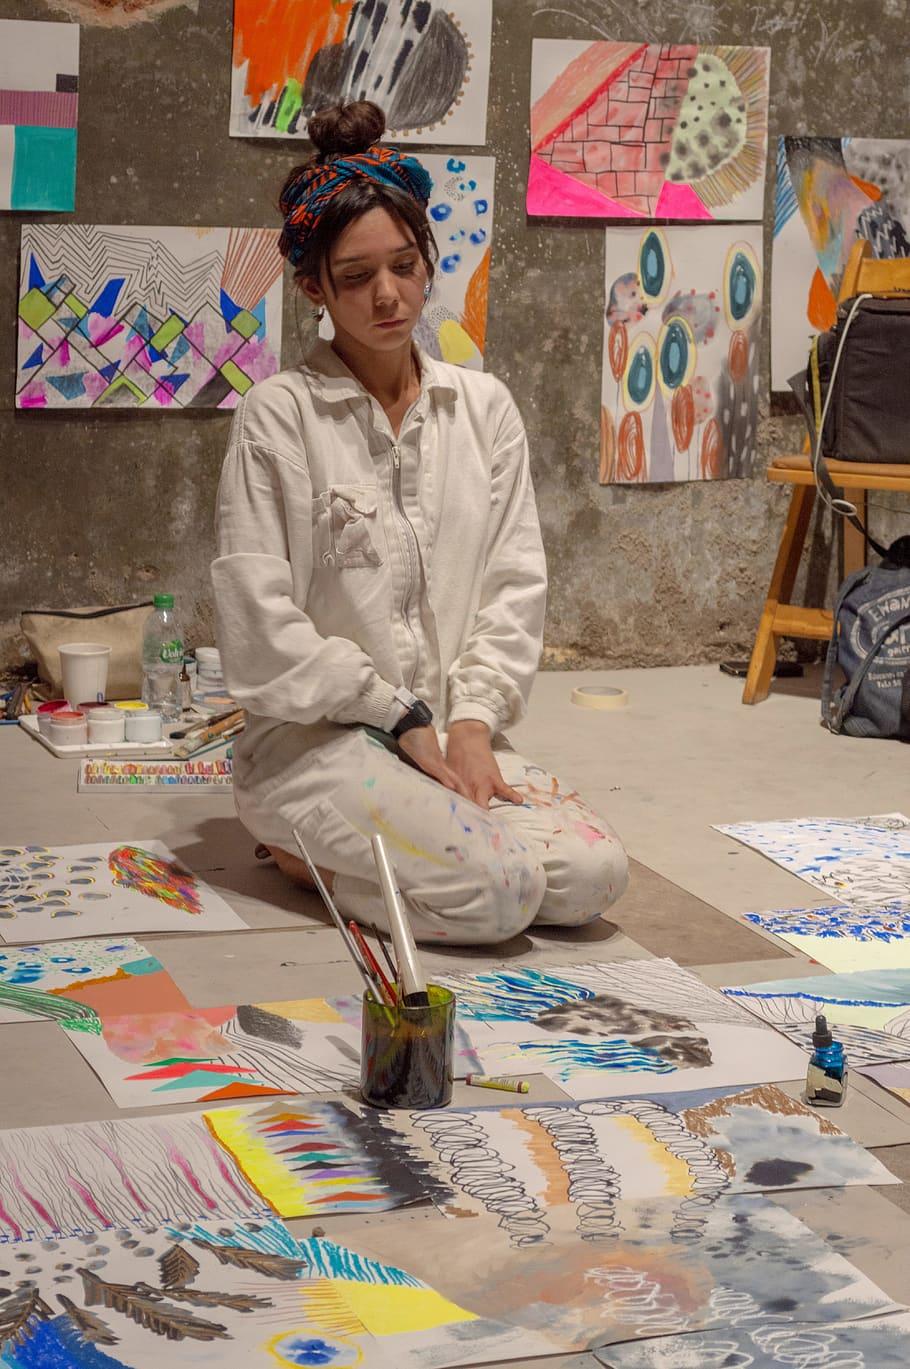 HD wallpaper: woman sitting near painting lot, creativity